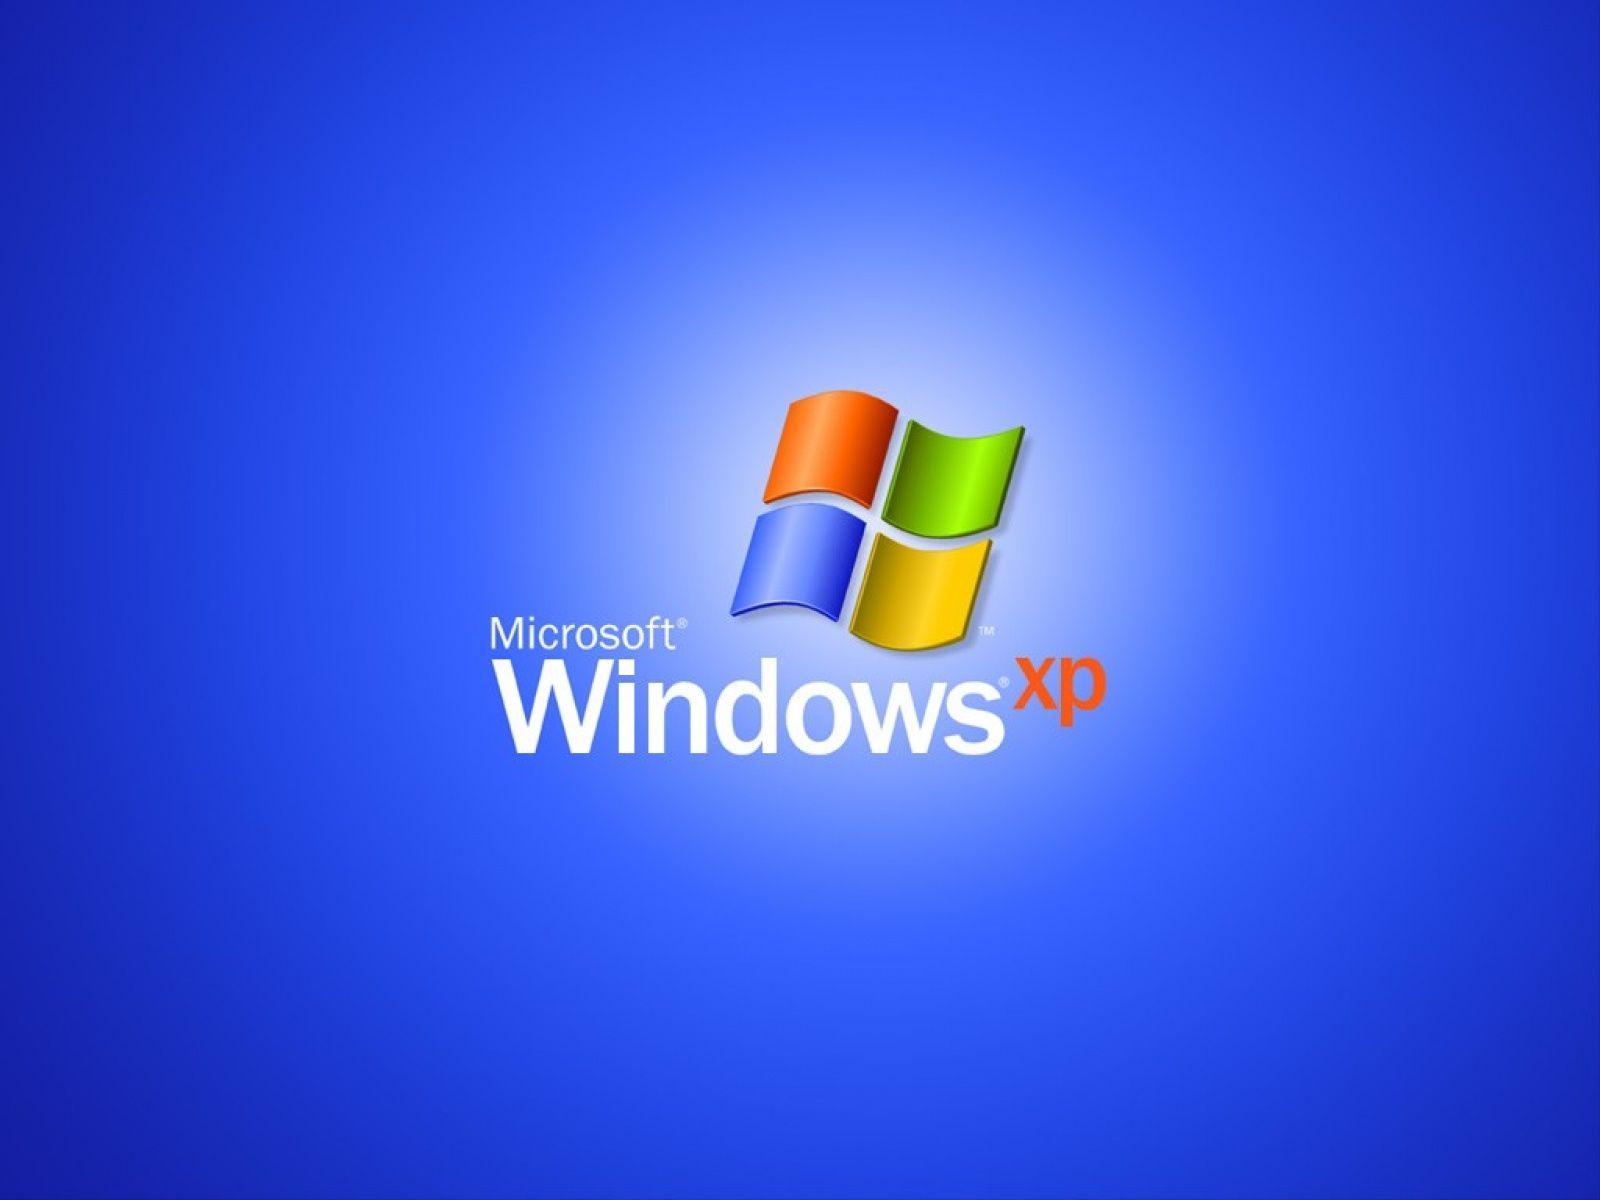 Microsoft Windows Xp Wallpapers - Wallpaper Cave